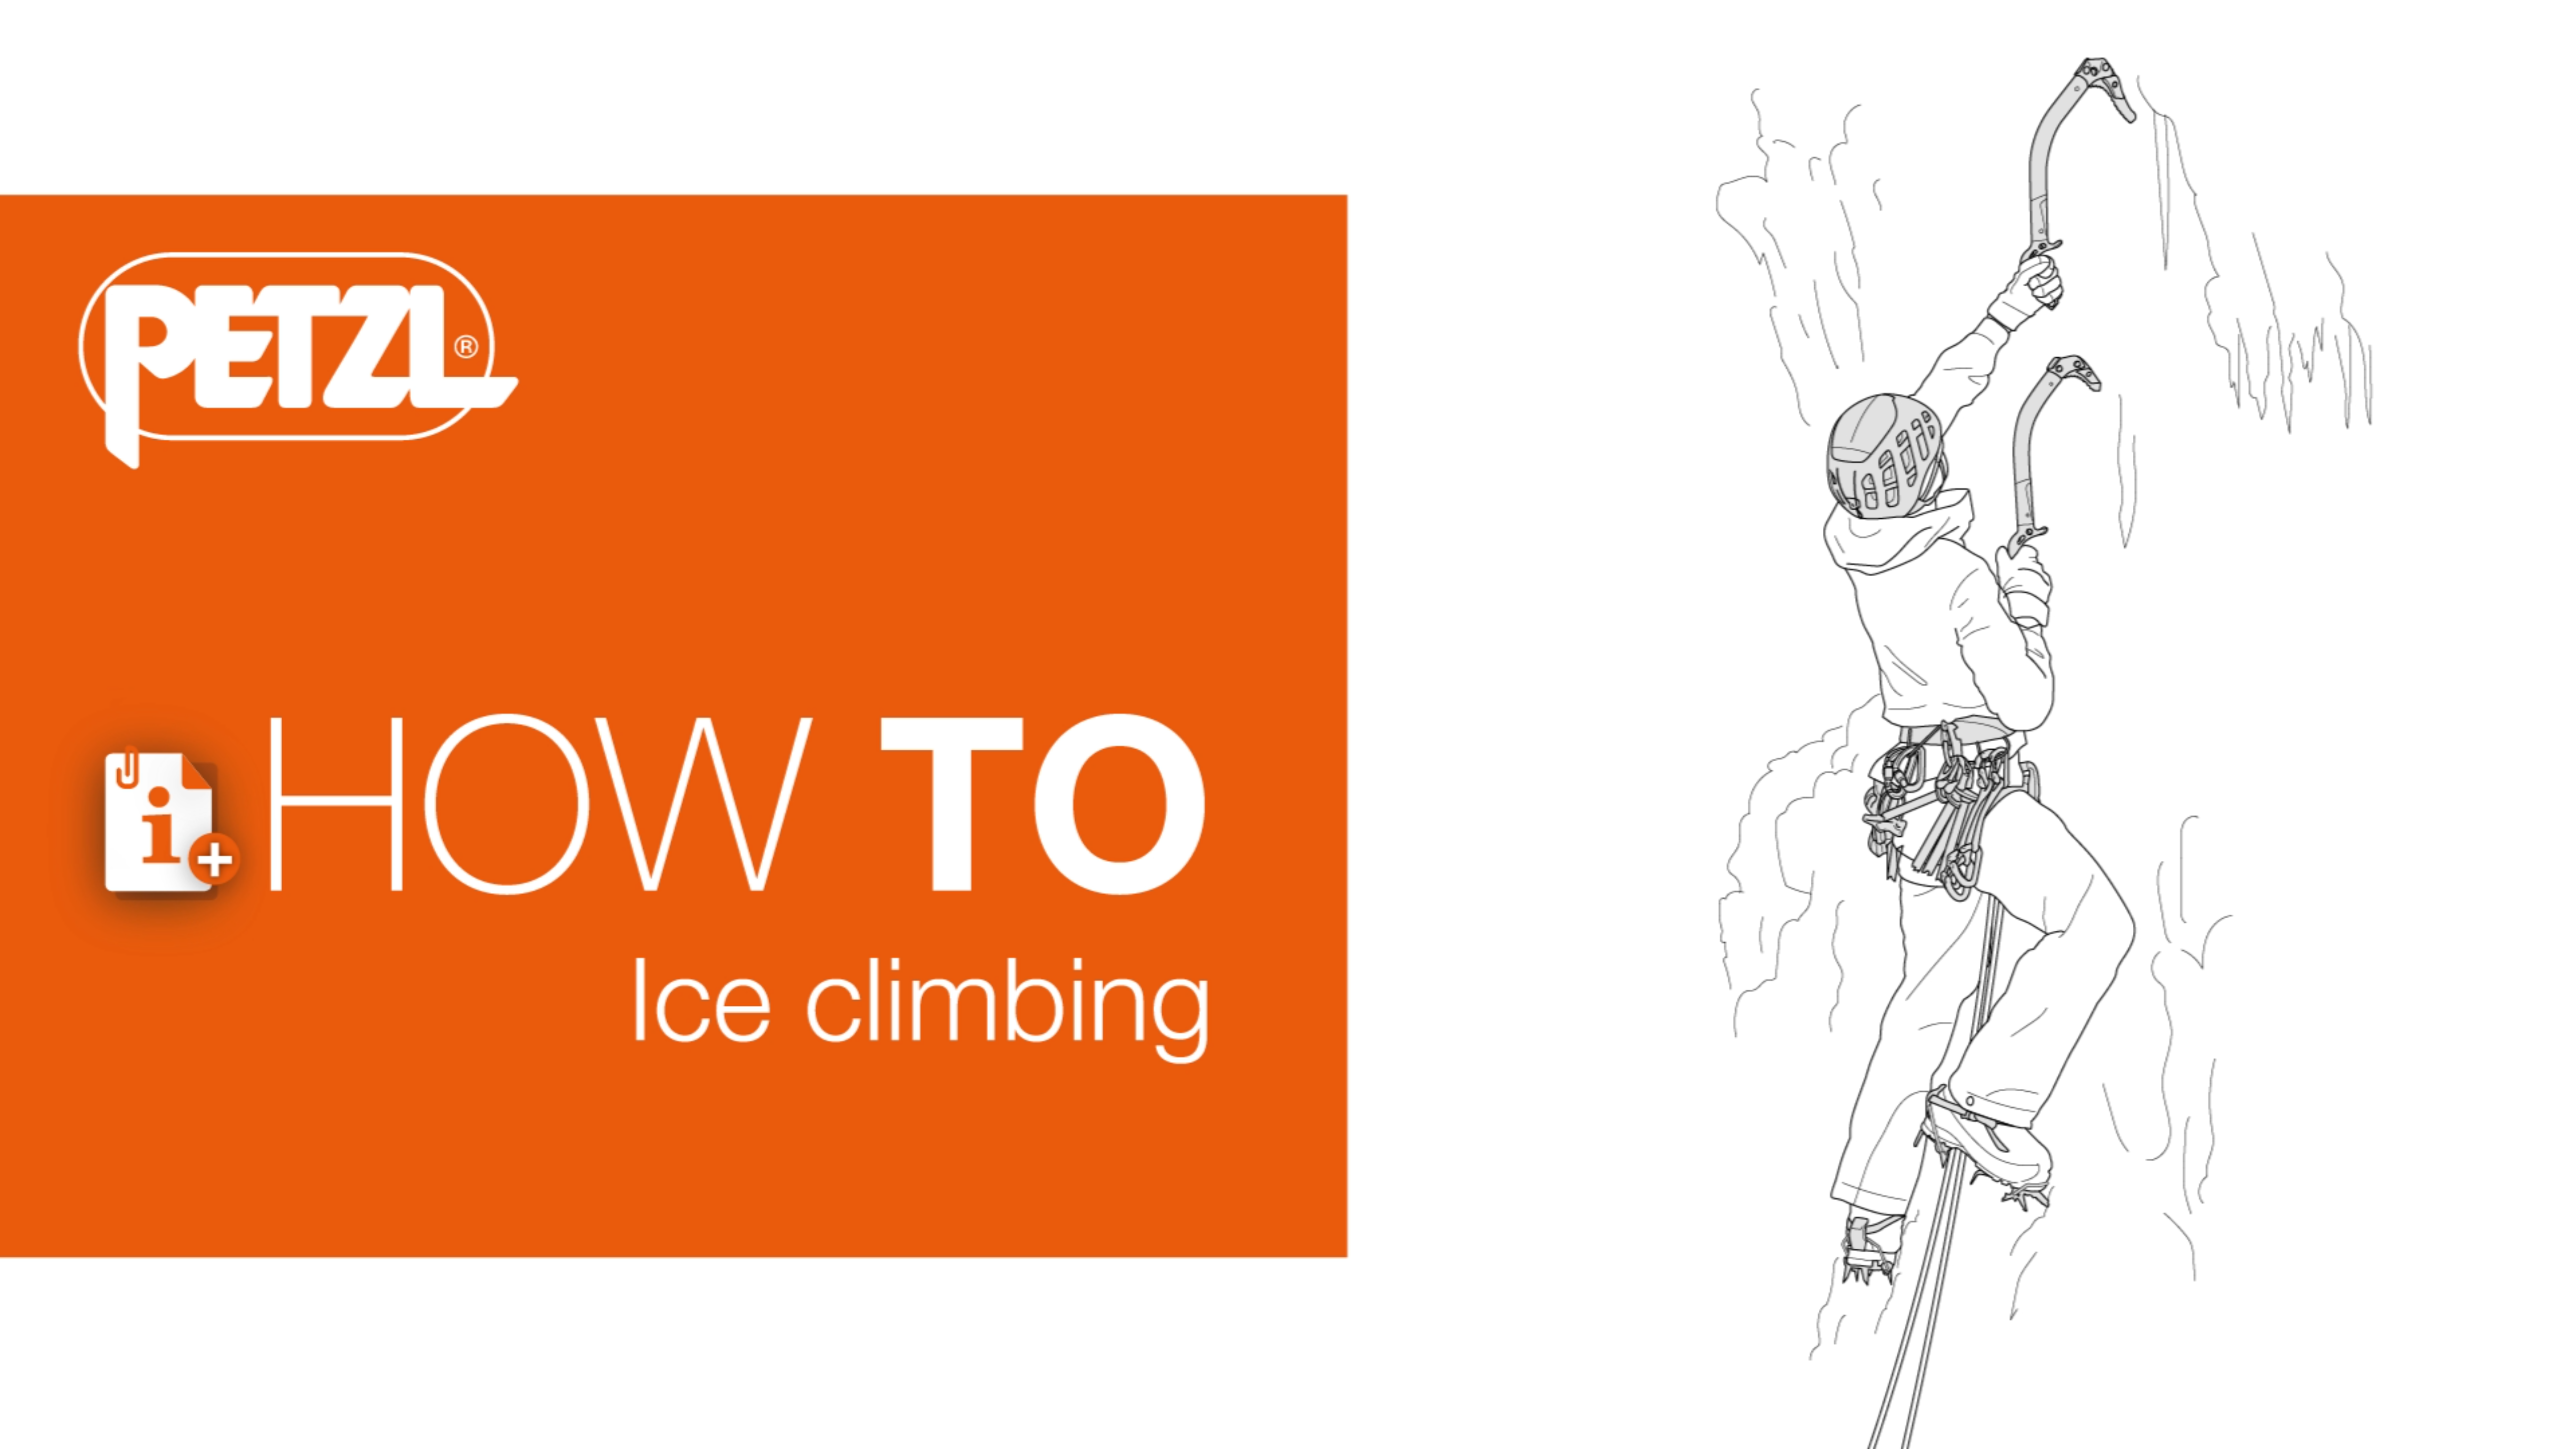 Tecnica in ice-climbing - le basi